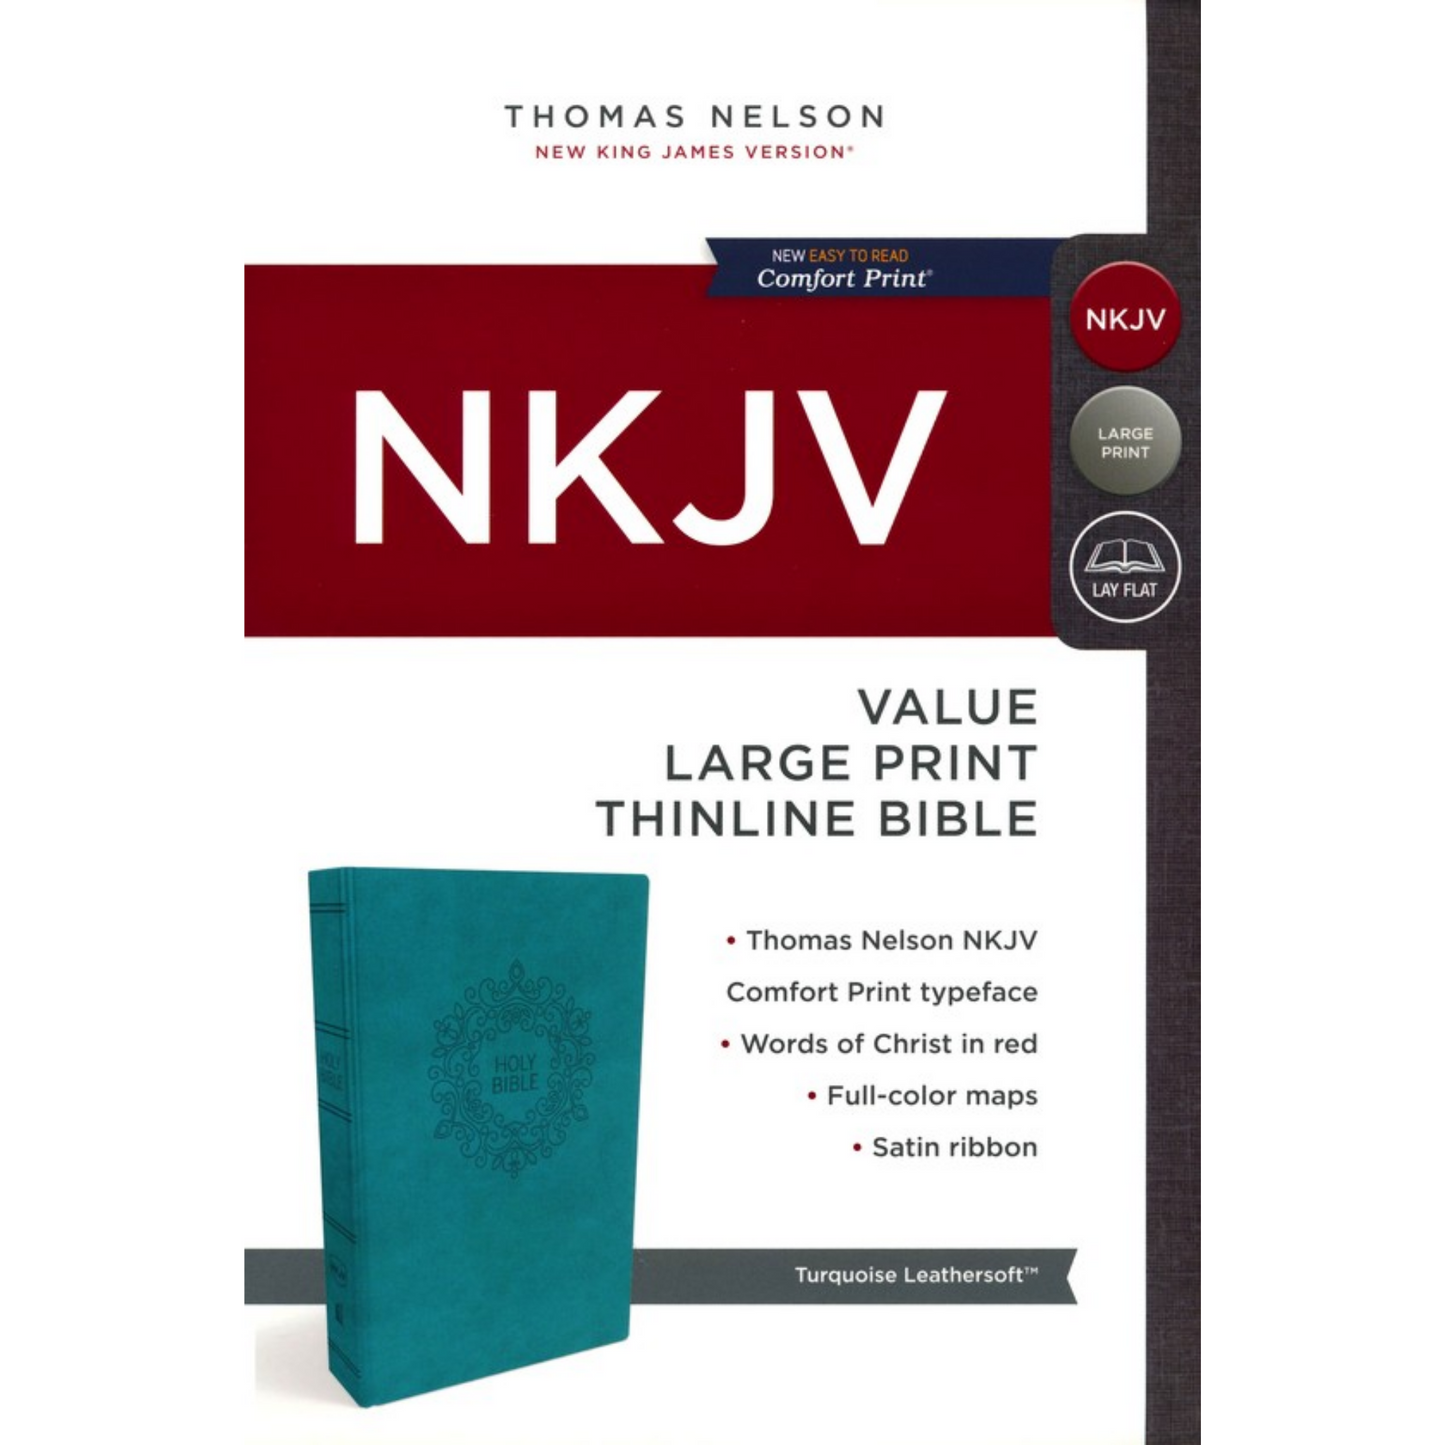 NKJV Value Thinline Bible, Large Print